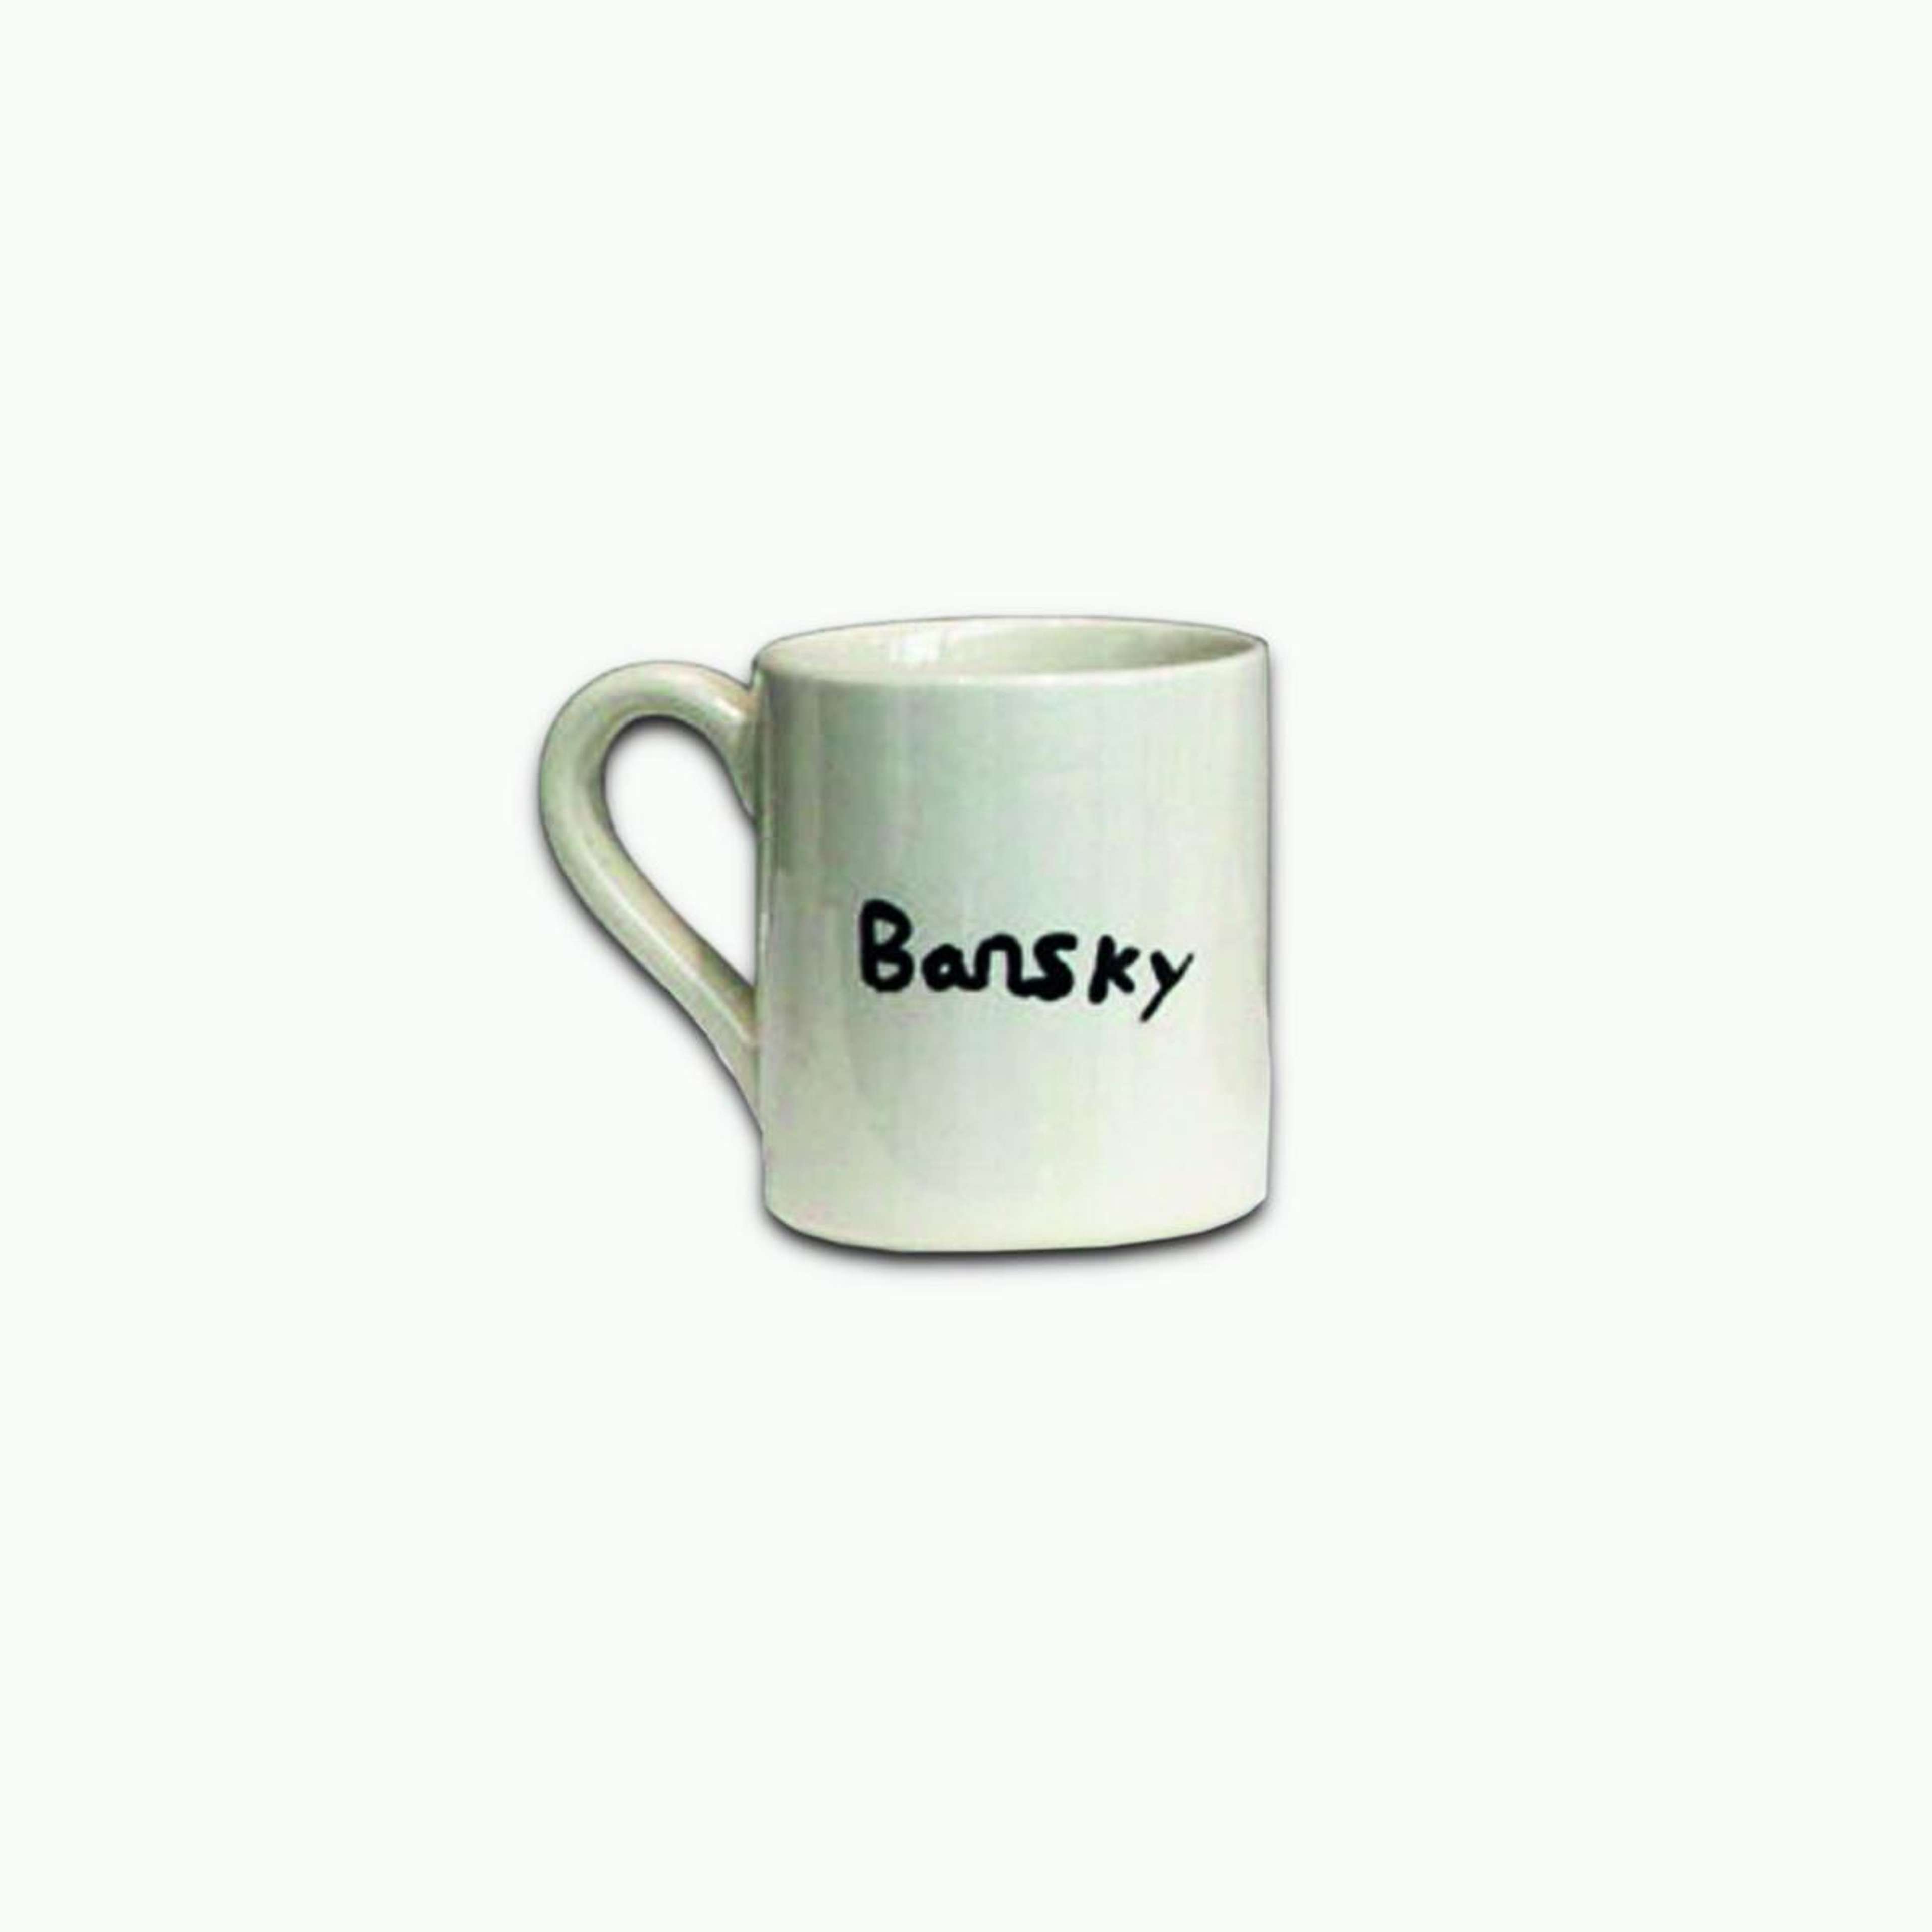 Banksy™ Mug - Mixed Media by Banksy 2019 - MyArtBroker